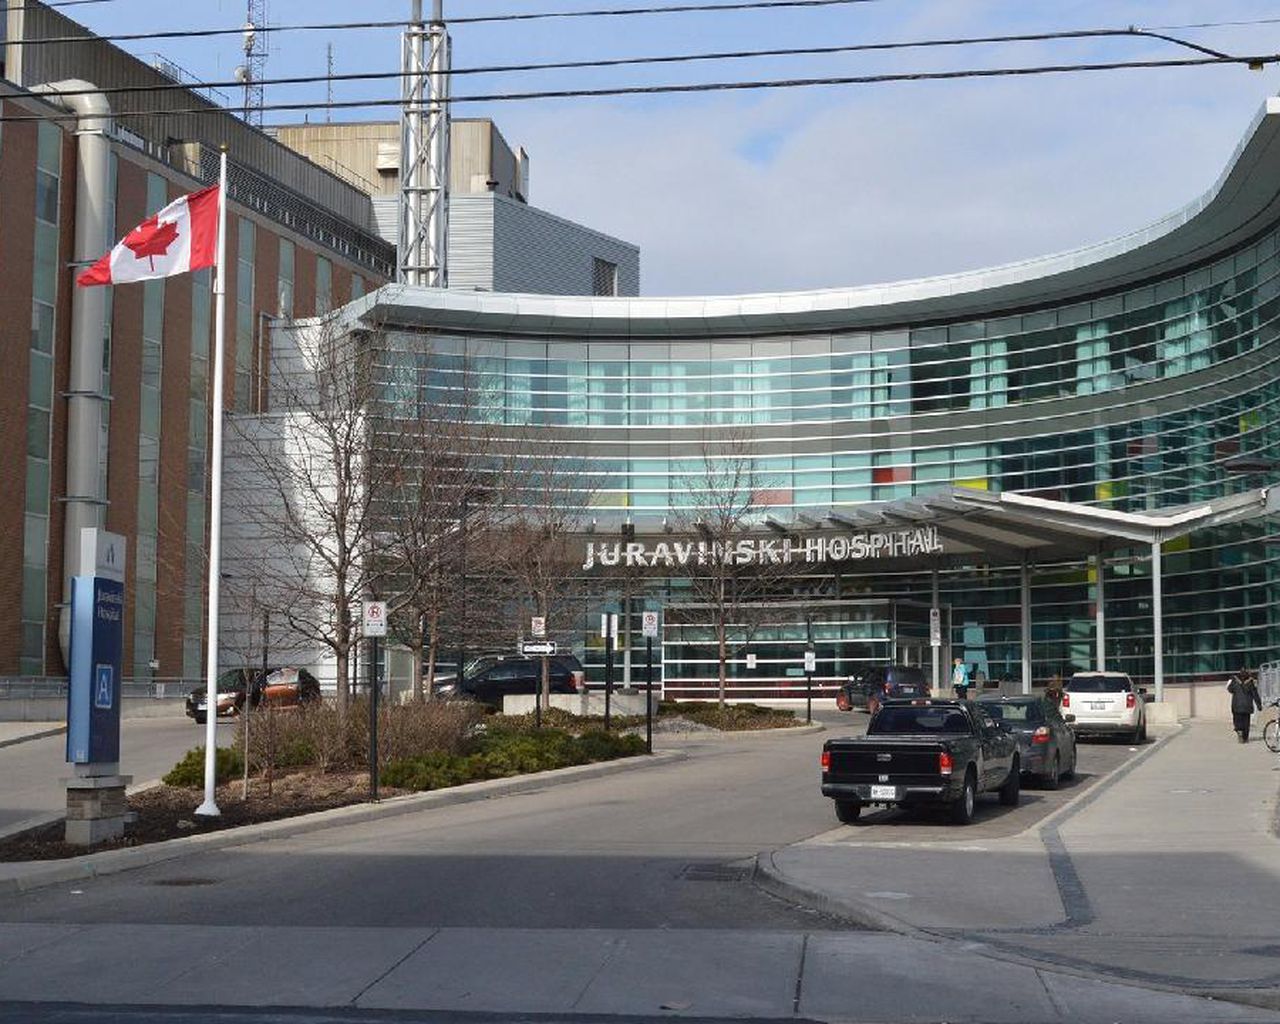 Juravinski Hospital Ontario, Canada